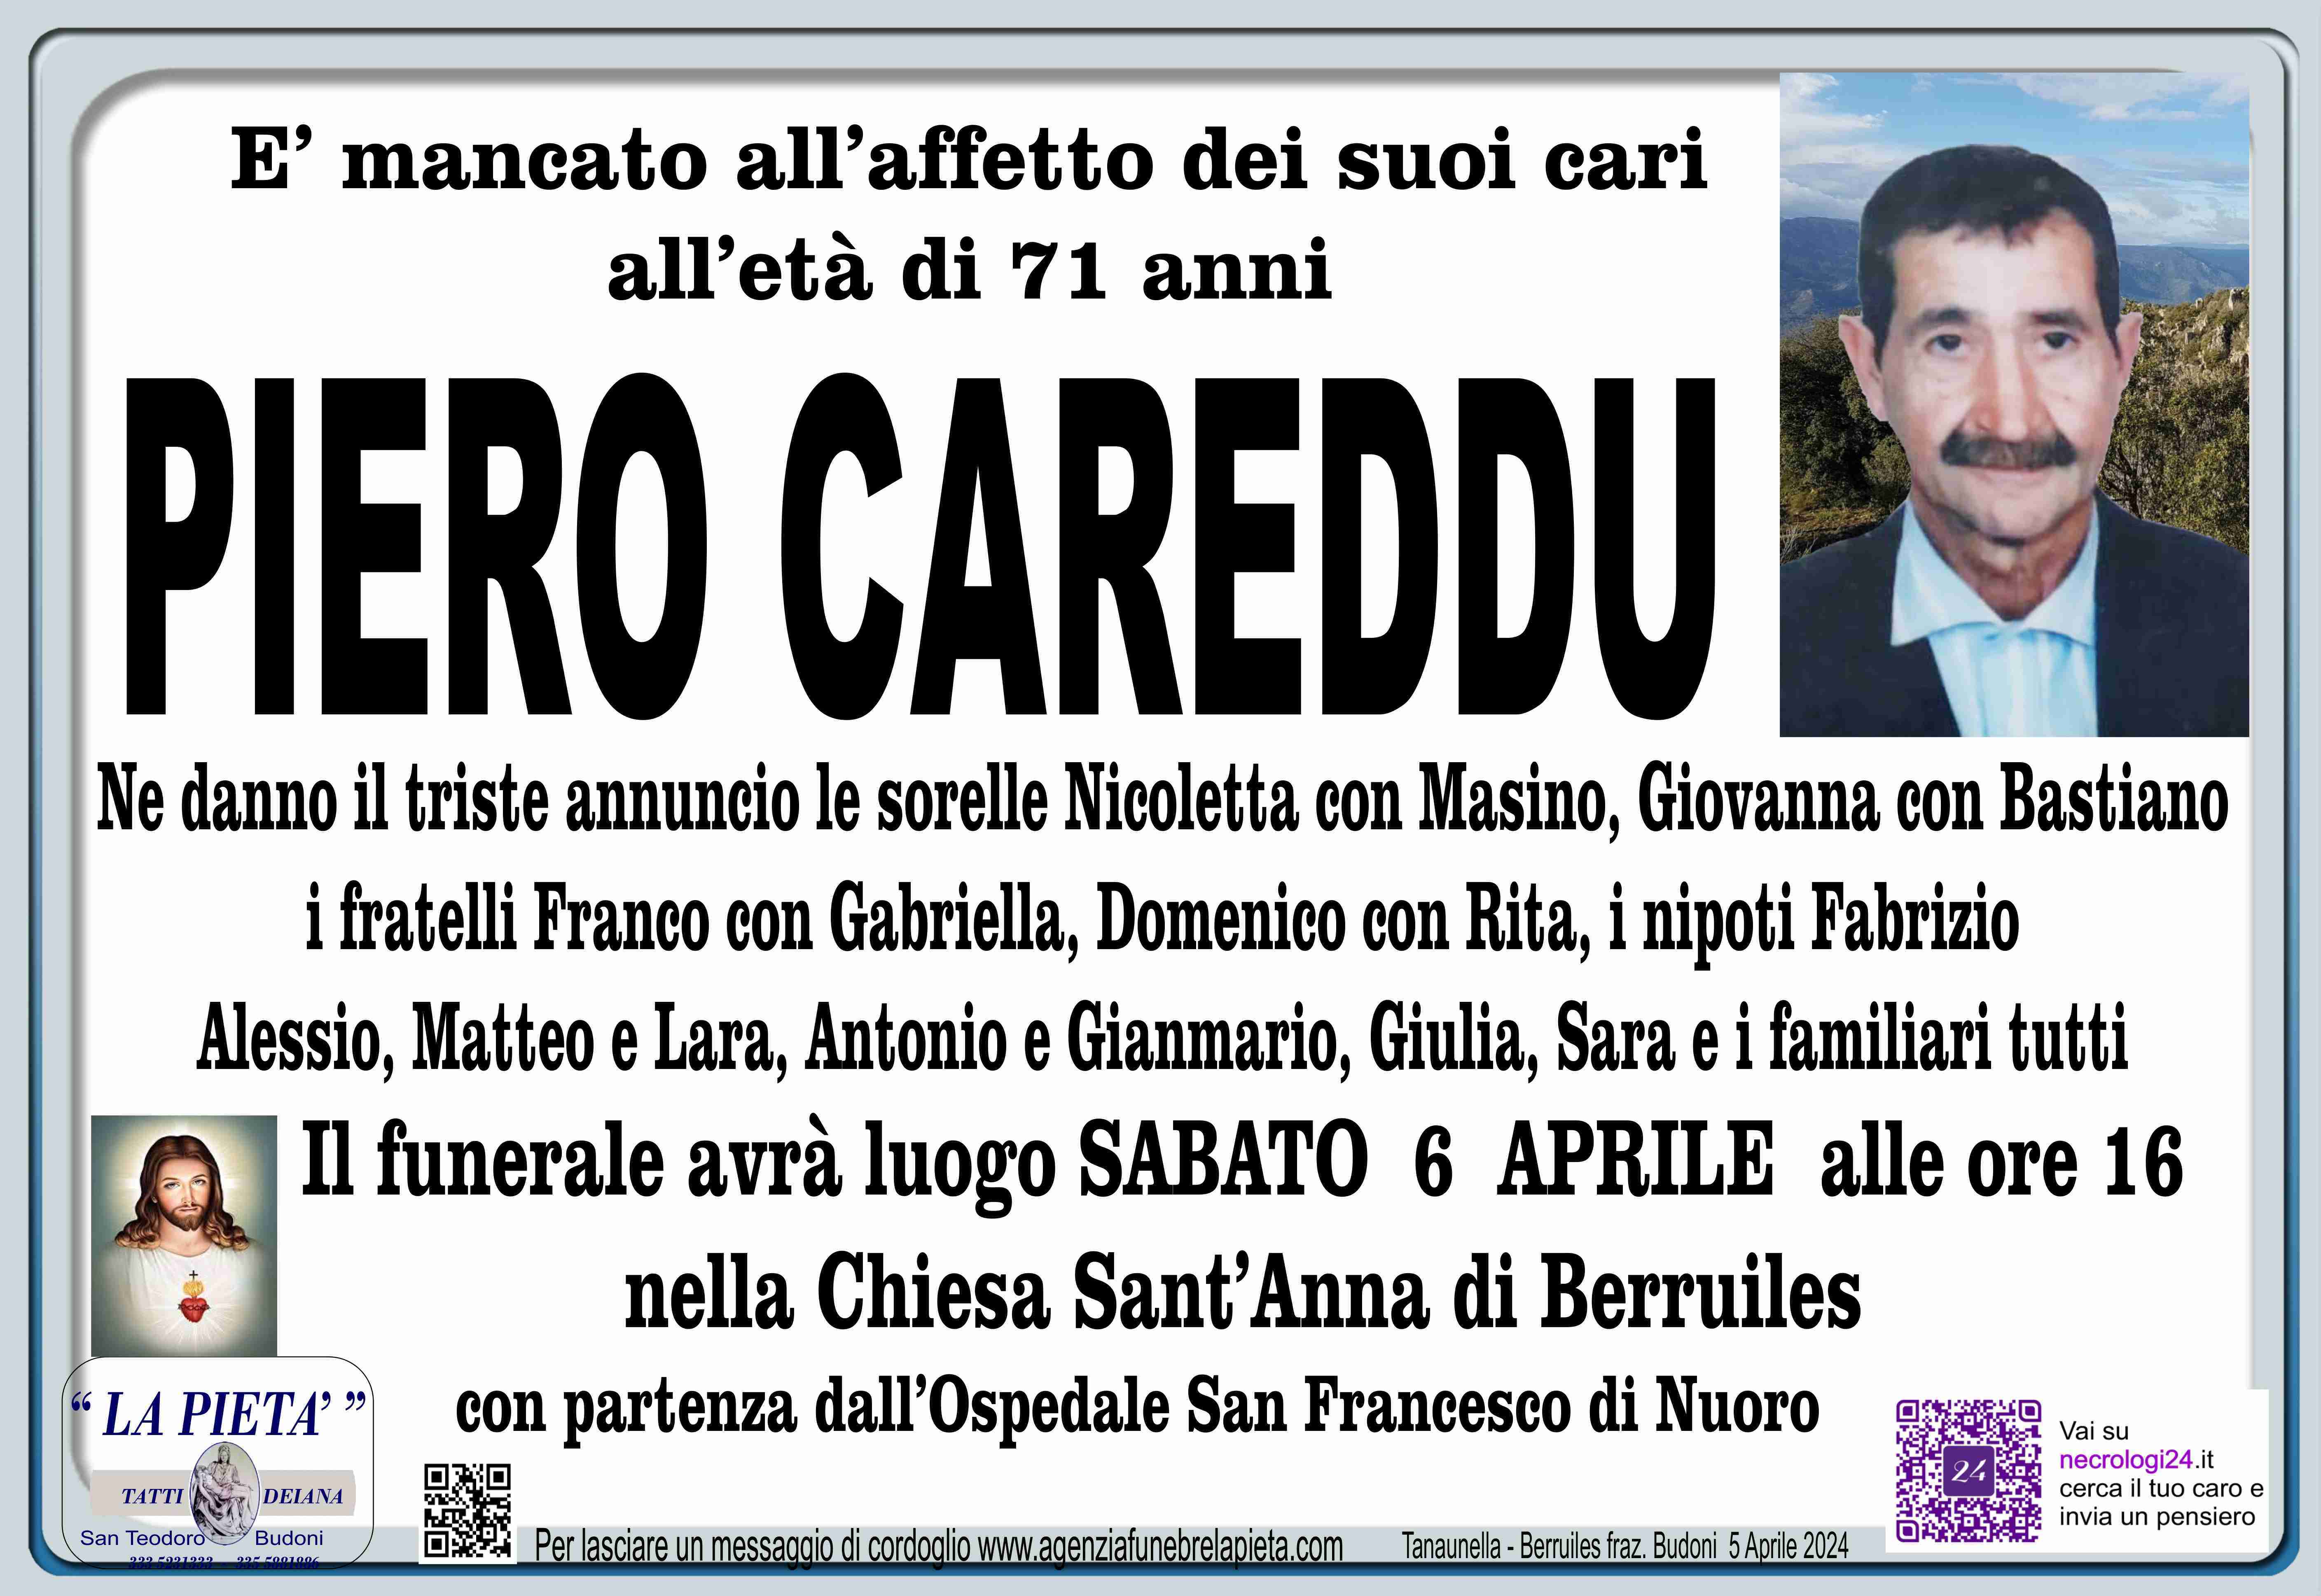 Piero Careddu